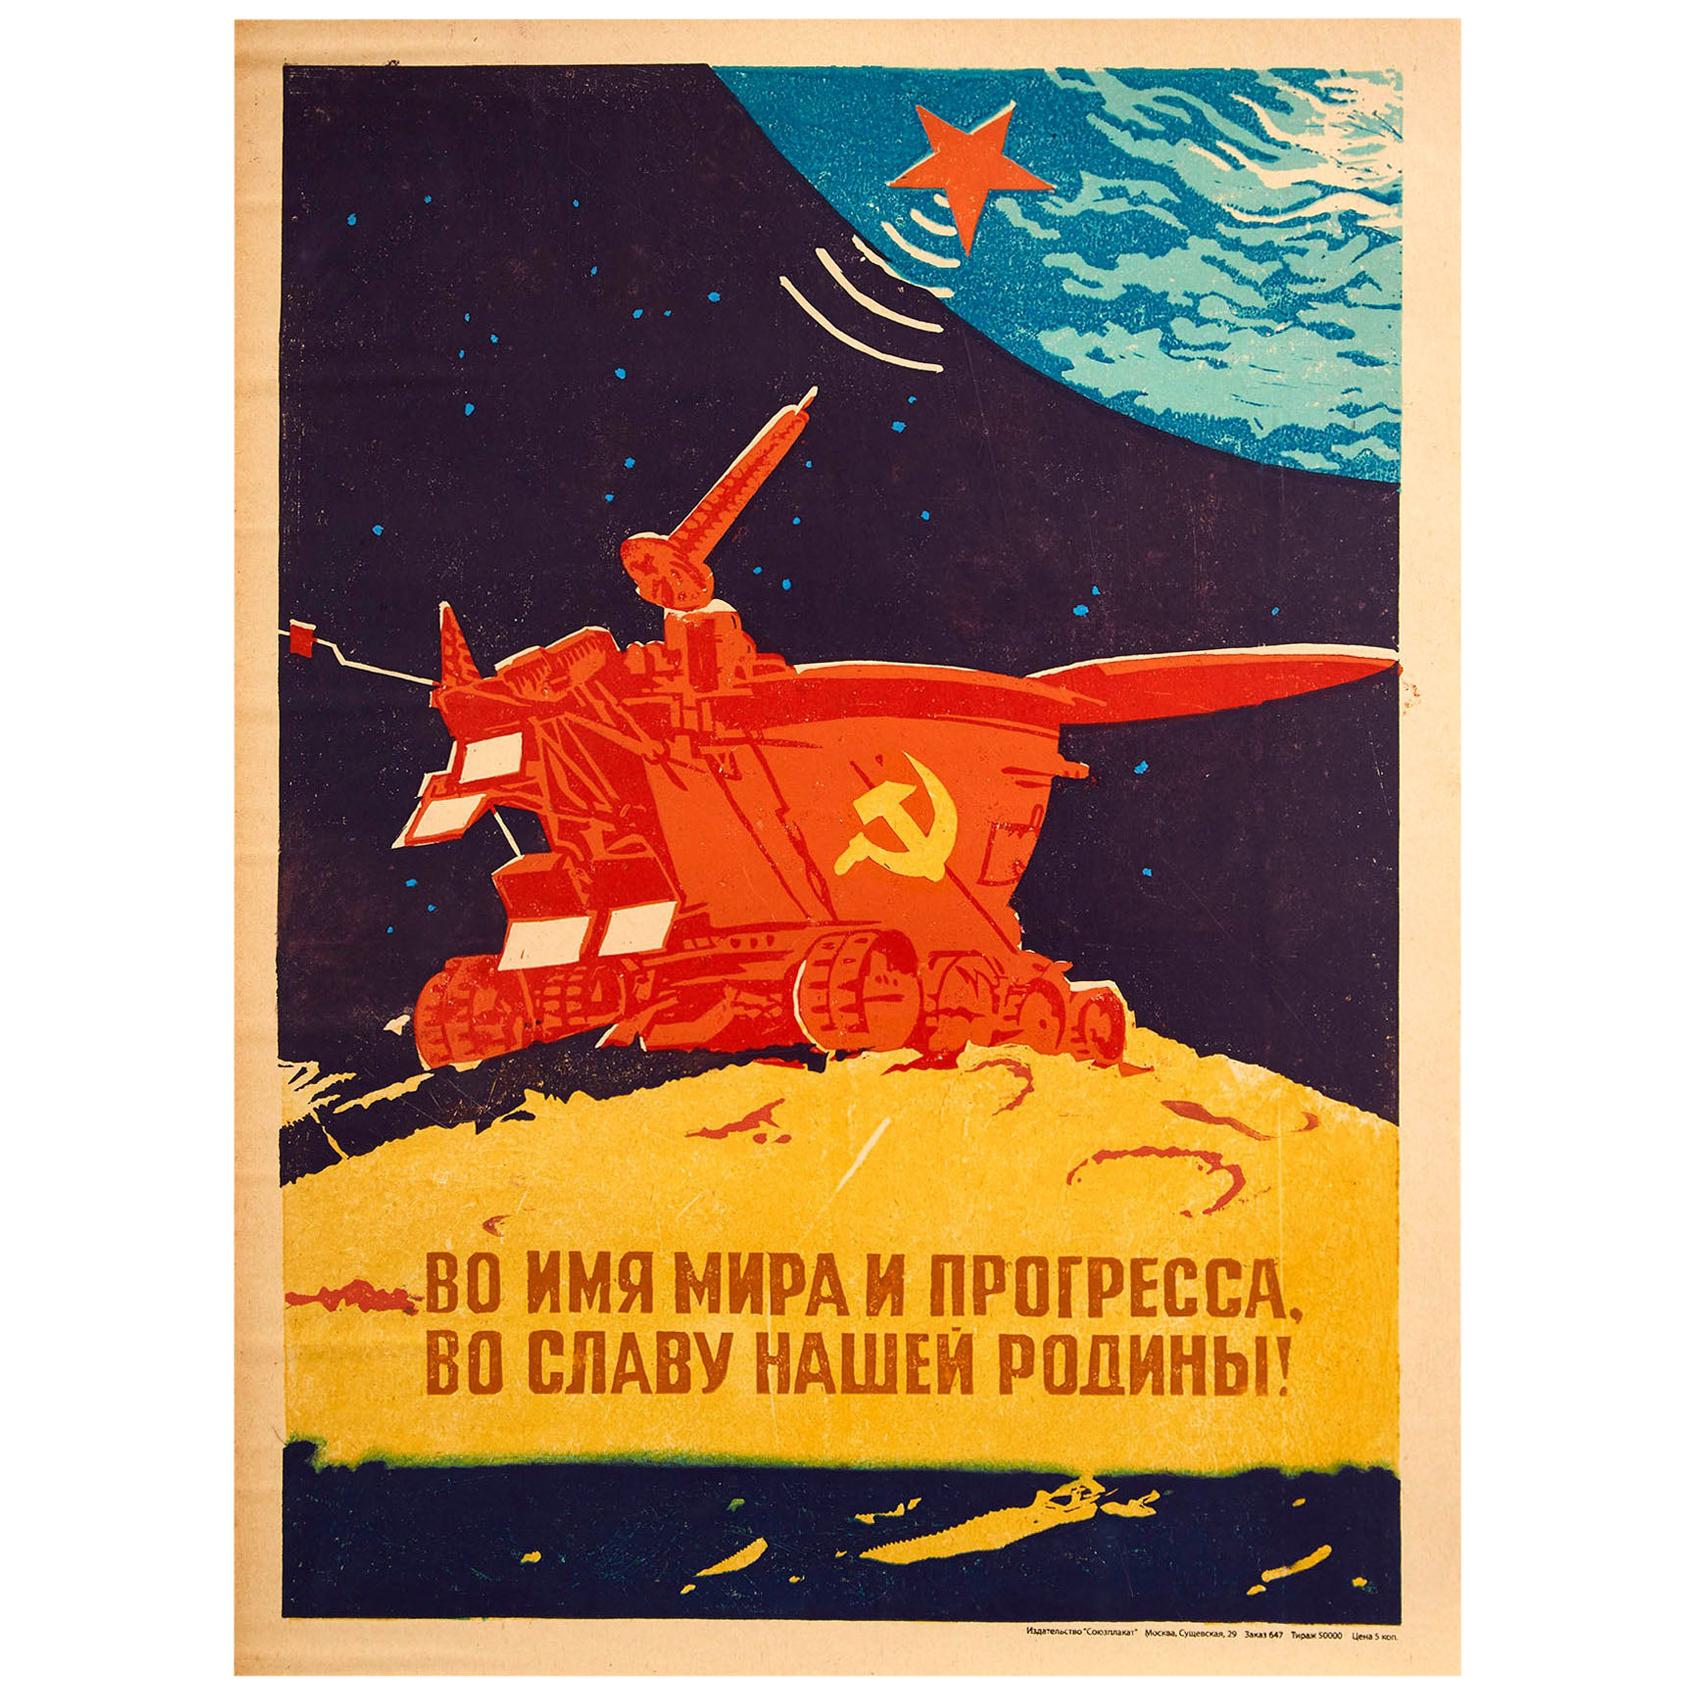 Original Vintage Poster Lunokhod Moonwalker Cold War Space Race Peace & Progress